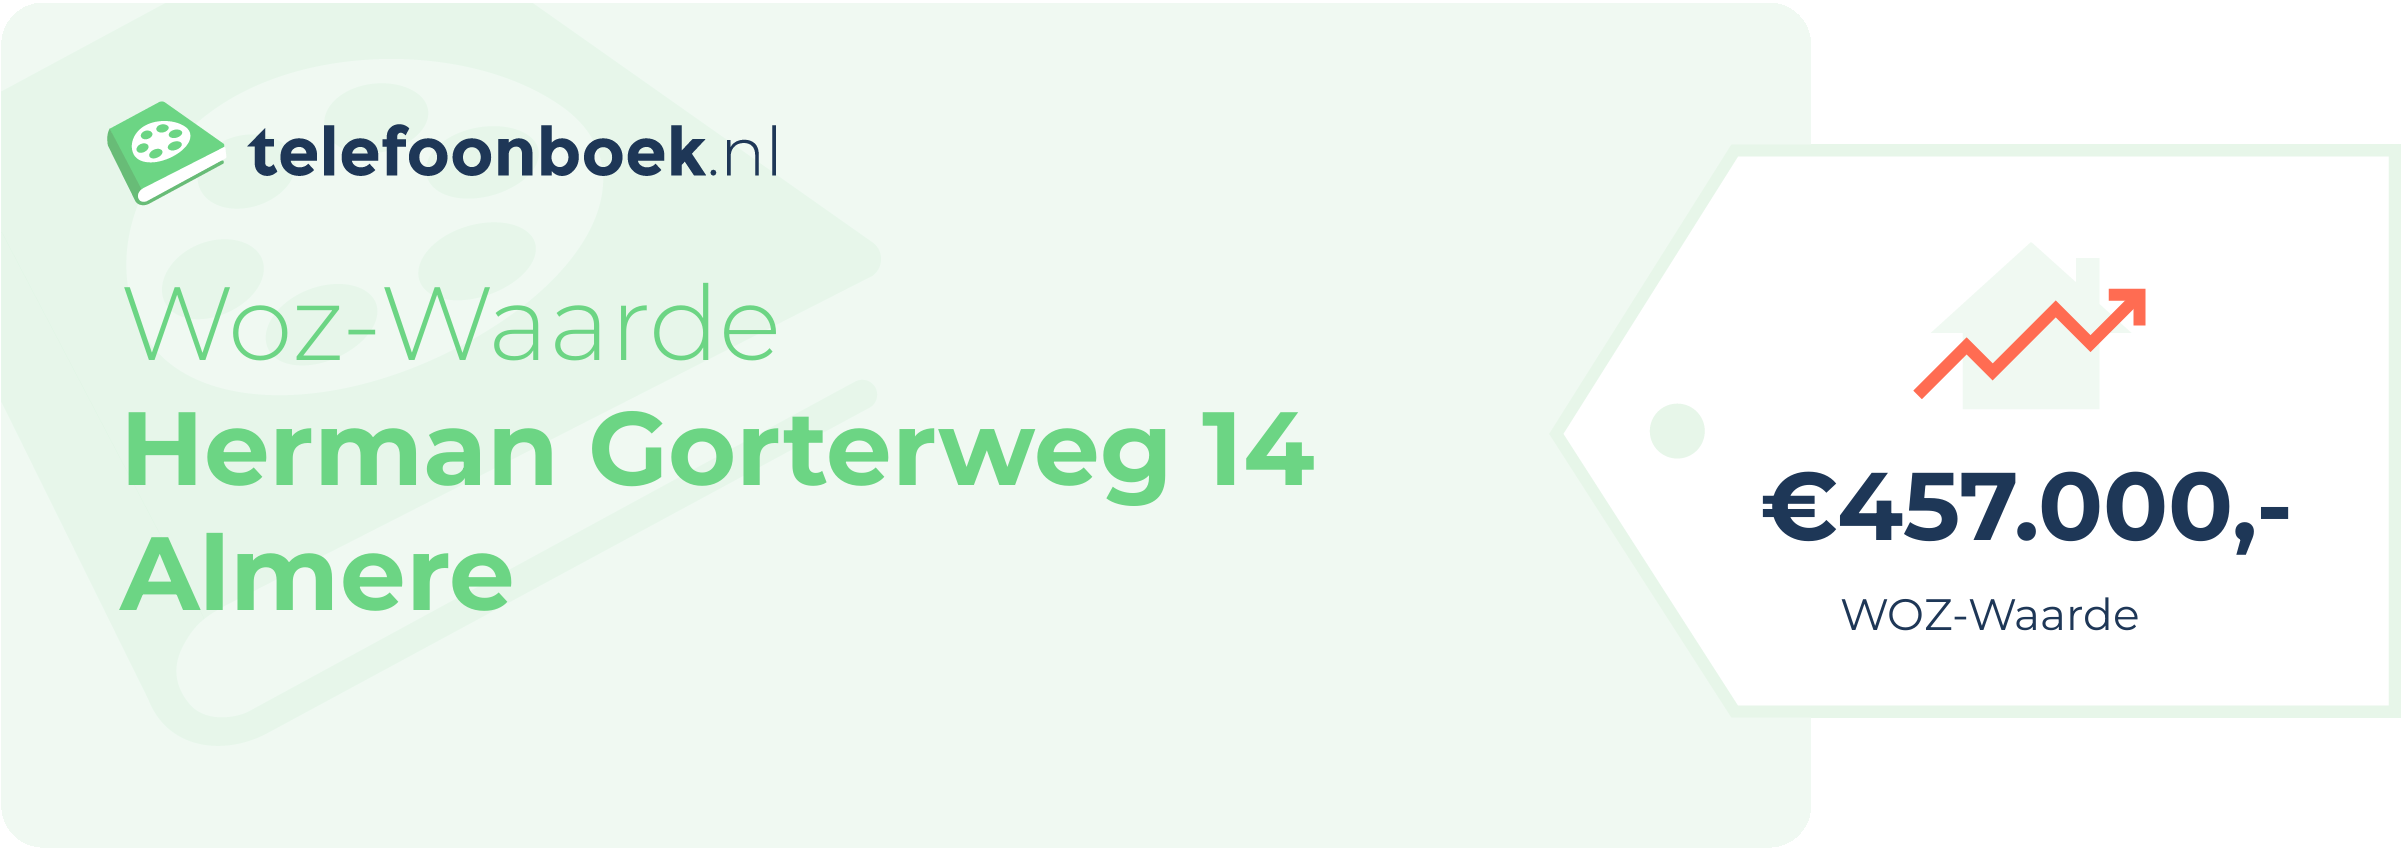 WOZ-waarde Herman Gorterweg 14 Almere